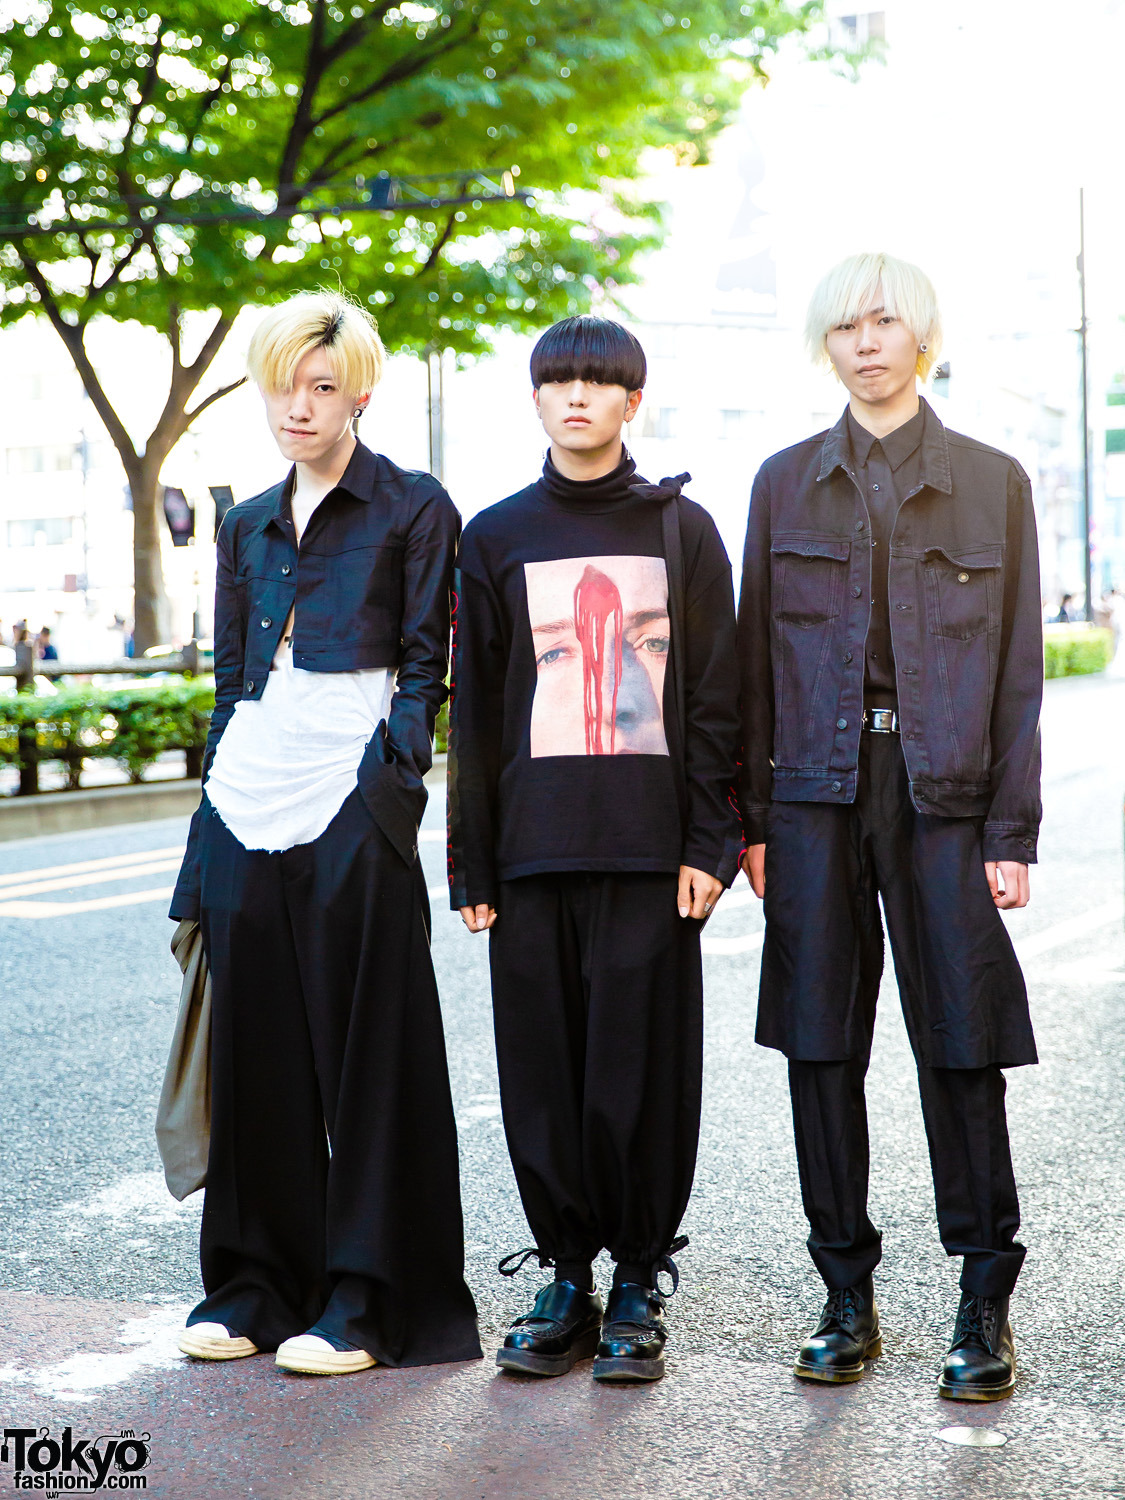 tokyo-fashion:  Japanese students Hikari, Ryo, and Koutarou on the street in Harajuku